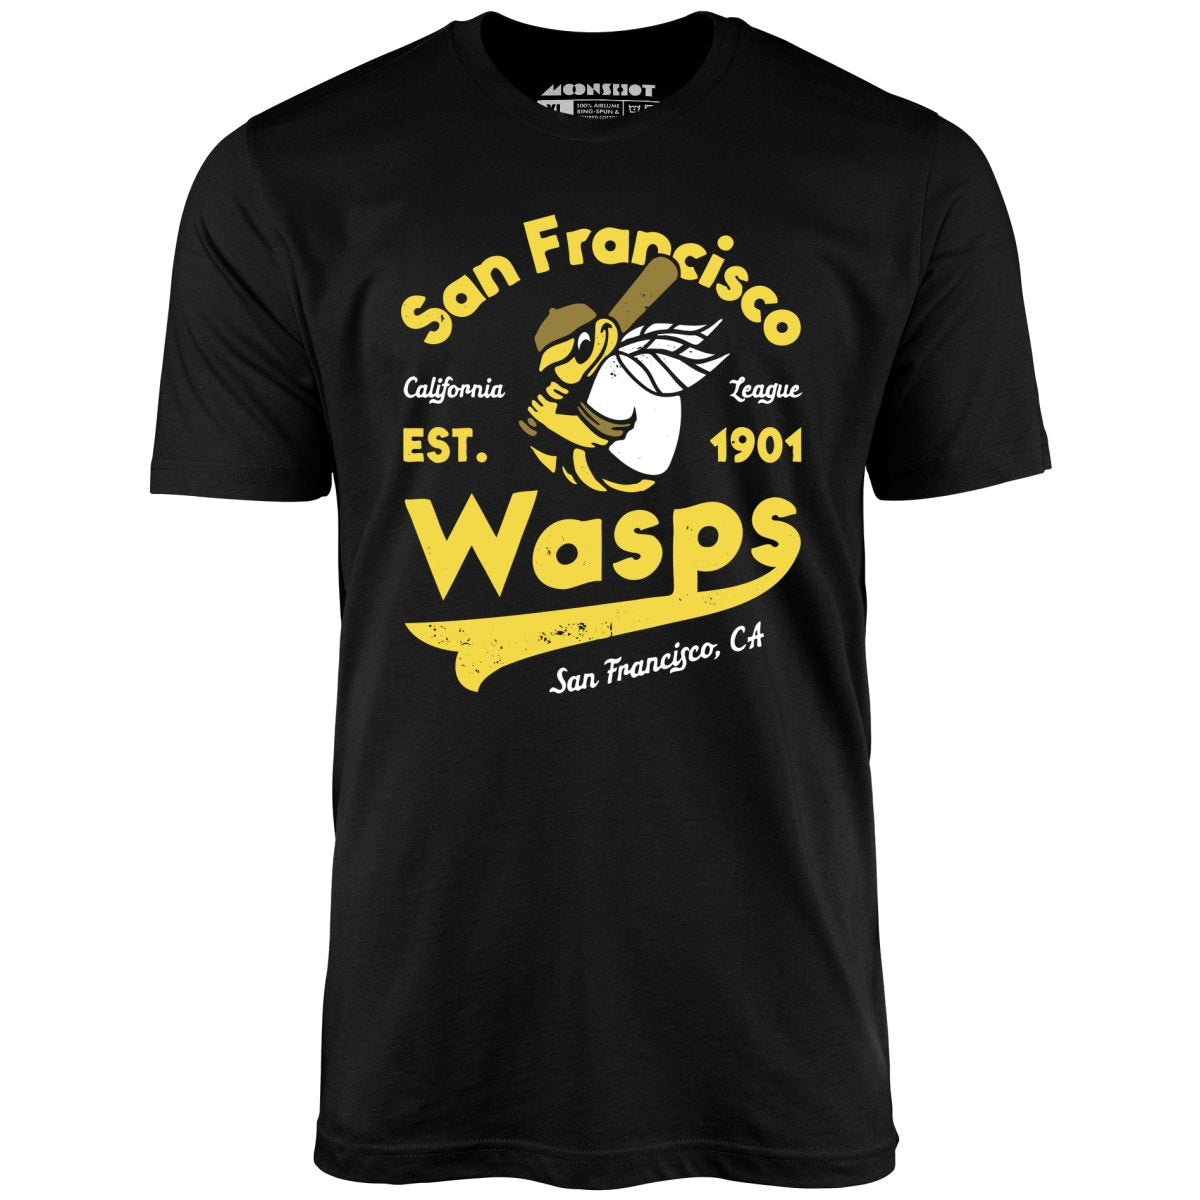 San Francisco Wasps - California - Vintage Defunct Baseball Teams - Unisex T-Shirt